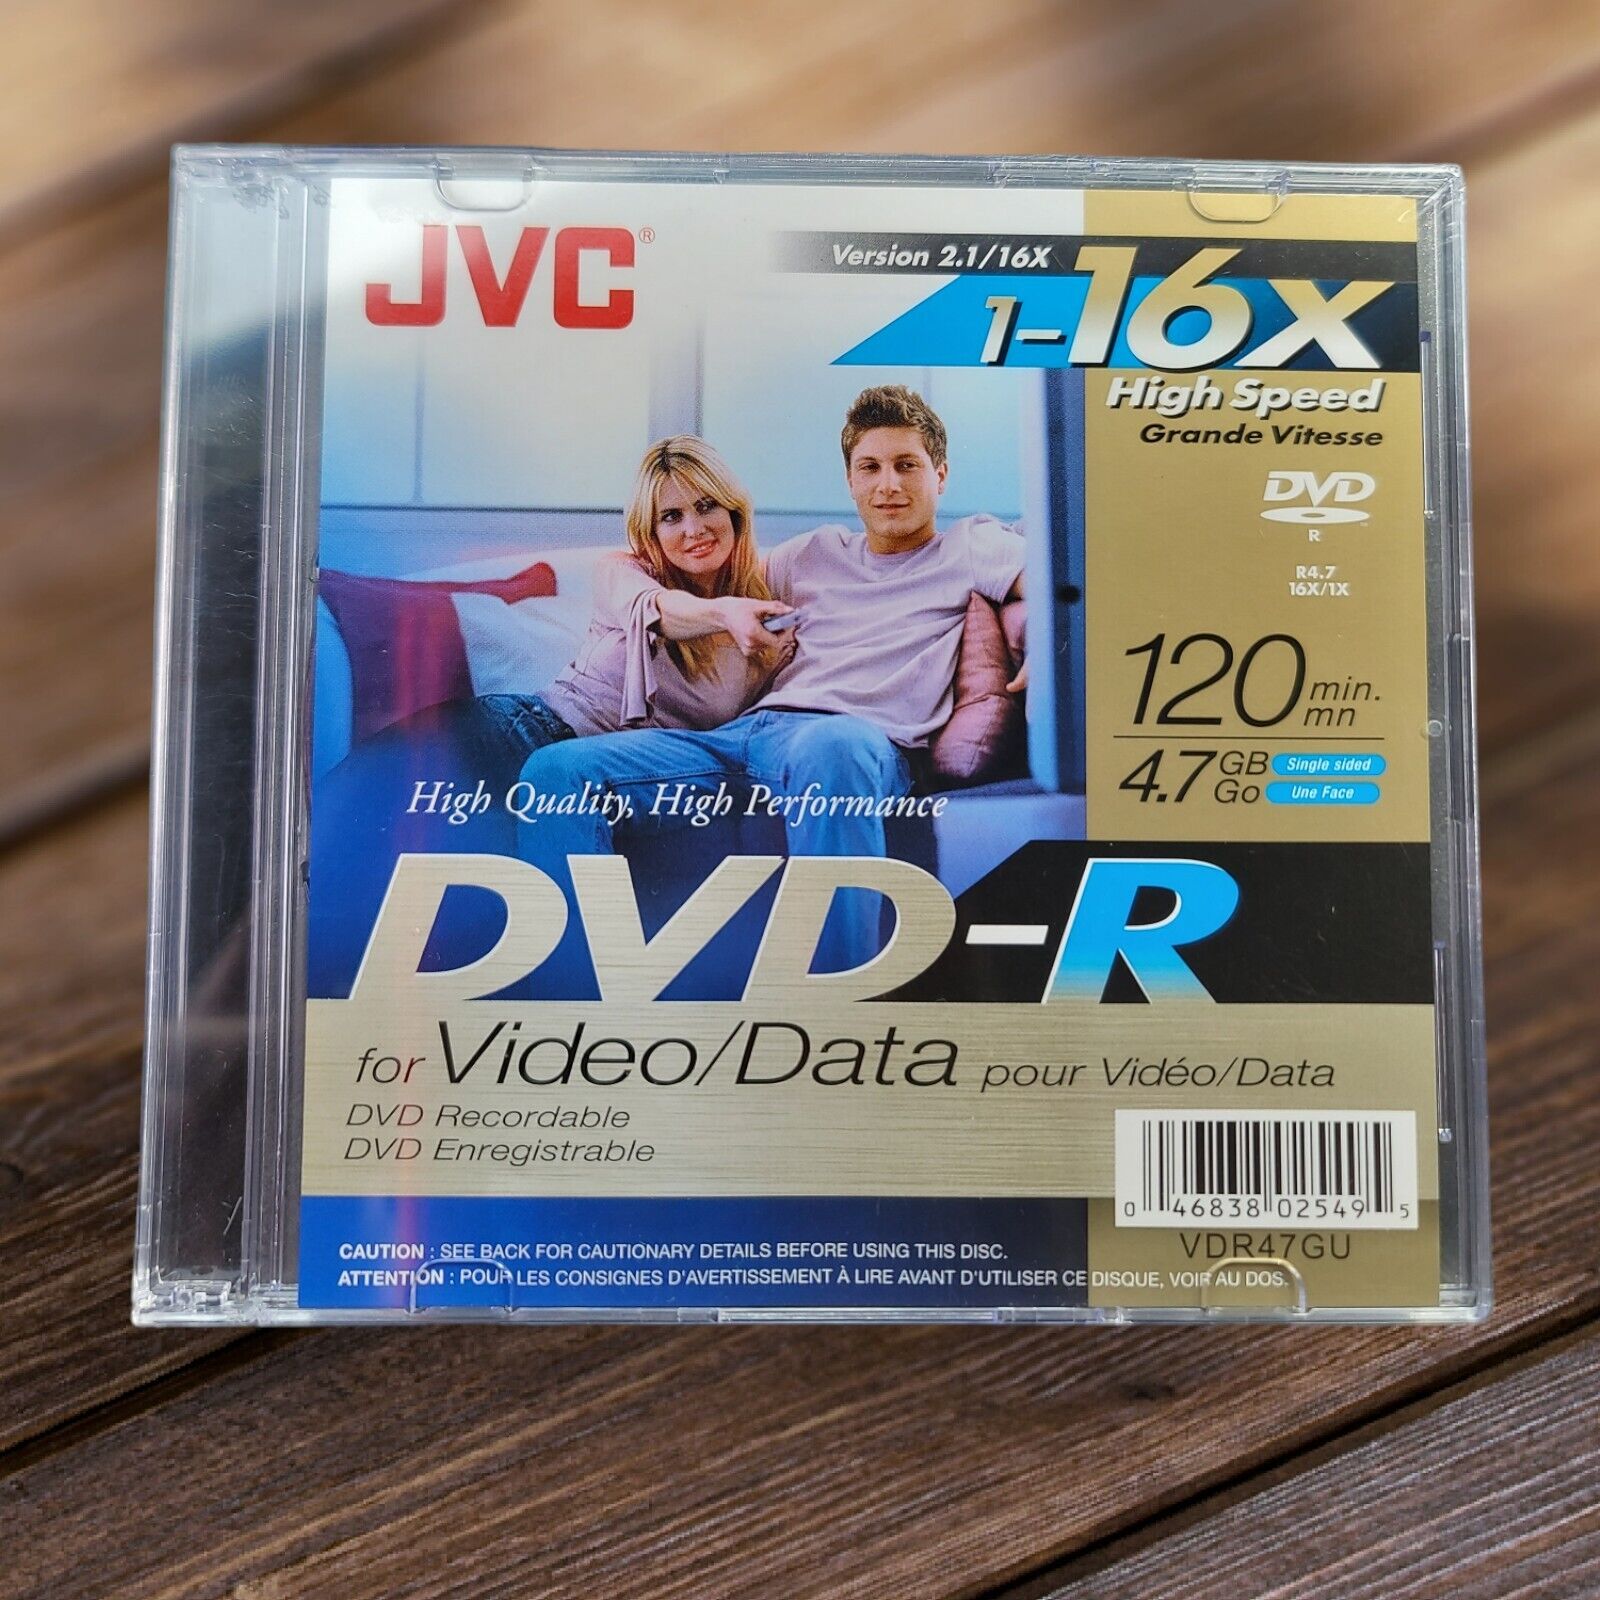 JVC DVD R Recording Disc New 16x High Speed 120 Minute Video/Data Recording